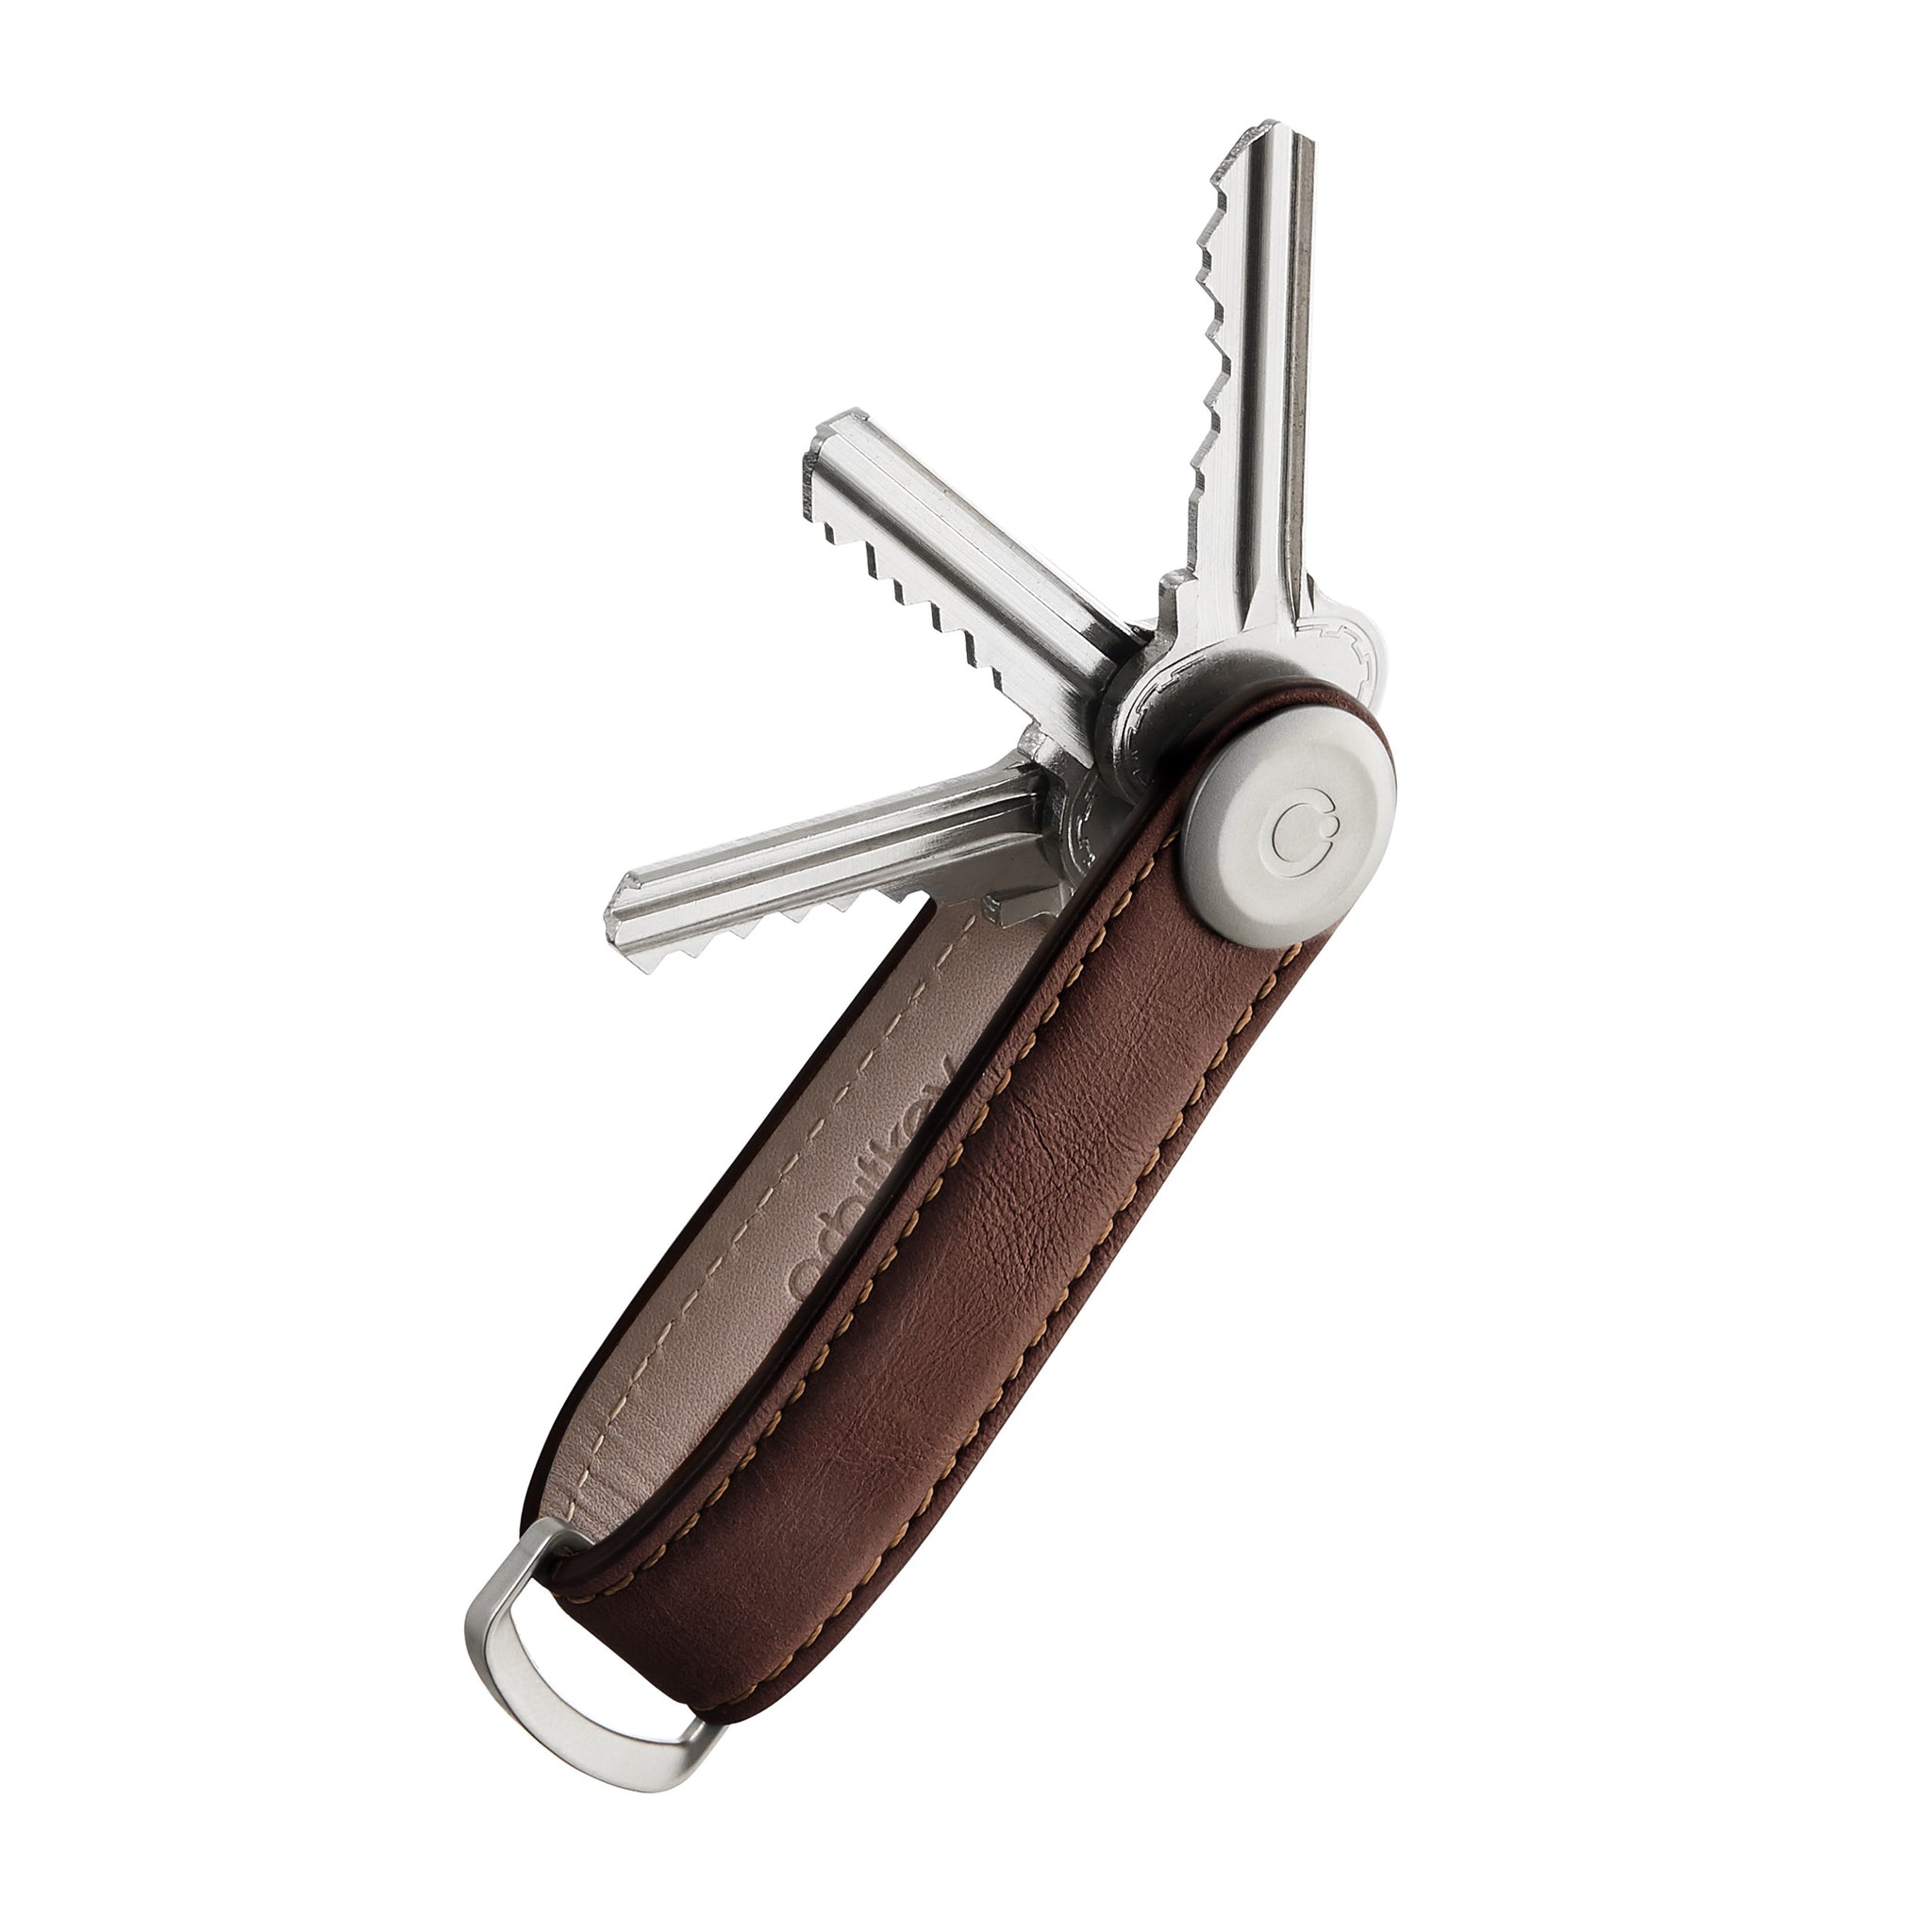 Key Organizer Orbitkey│Premium Leather Espresso Brown│art. LTHO-2-ESBR│Sleutelhanger leer met uitgevouwen sleutels